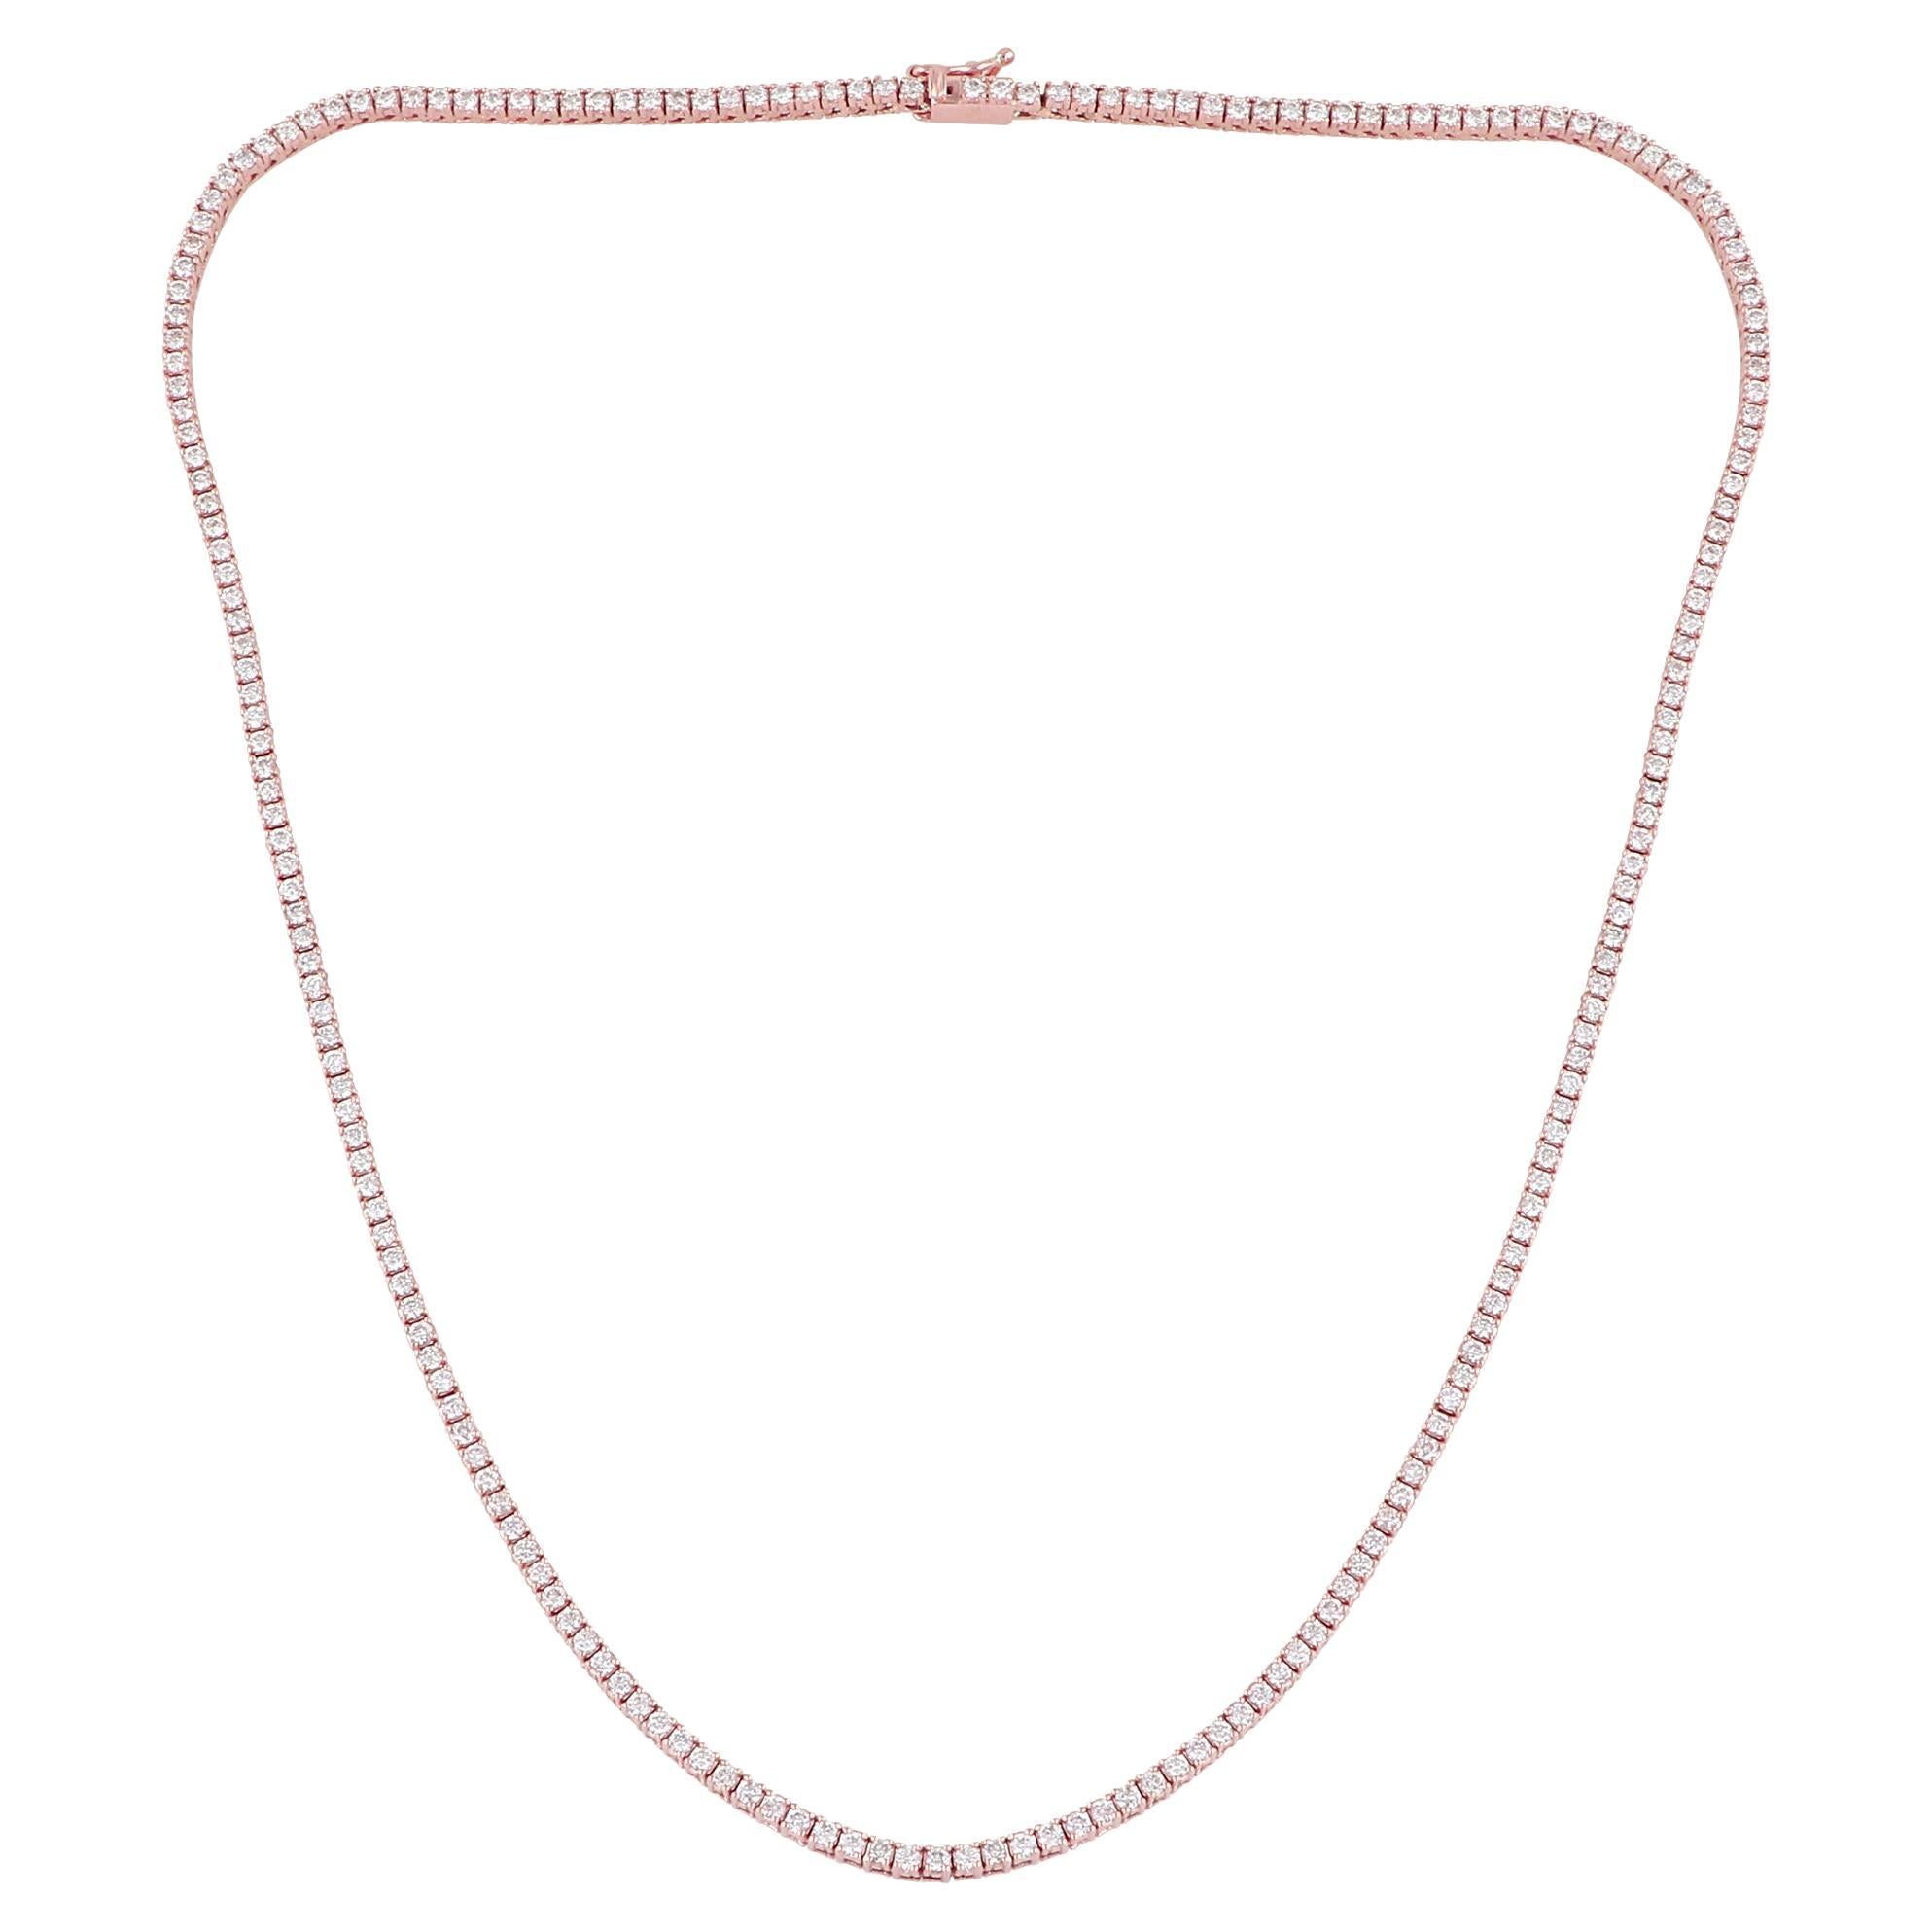 3.60 Carat SI Clarity HI Color Diamond Chain Necklace 14 Karat Rose Gold Jewelry For Sale